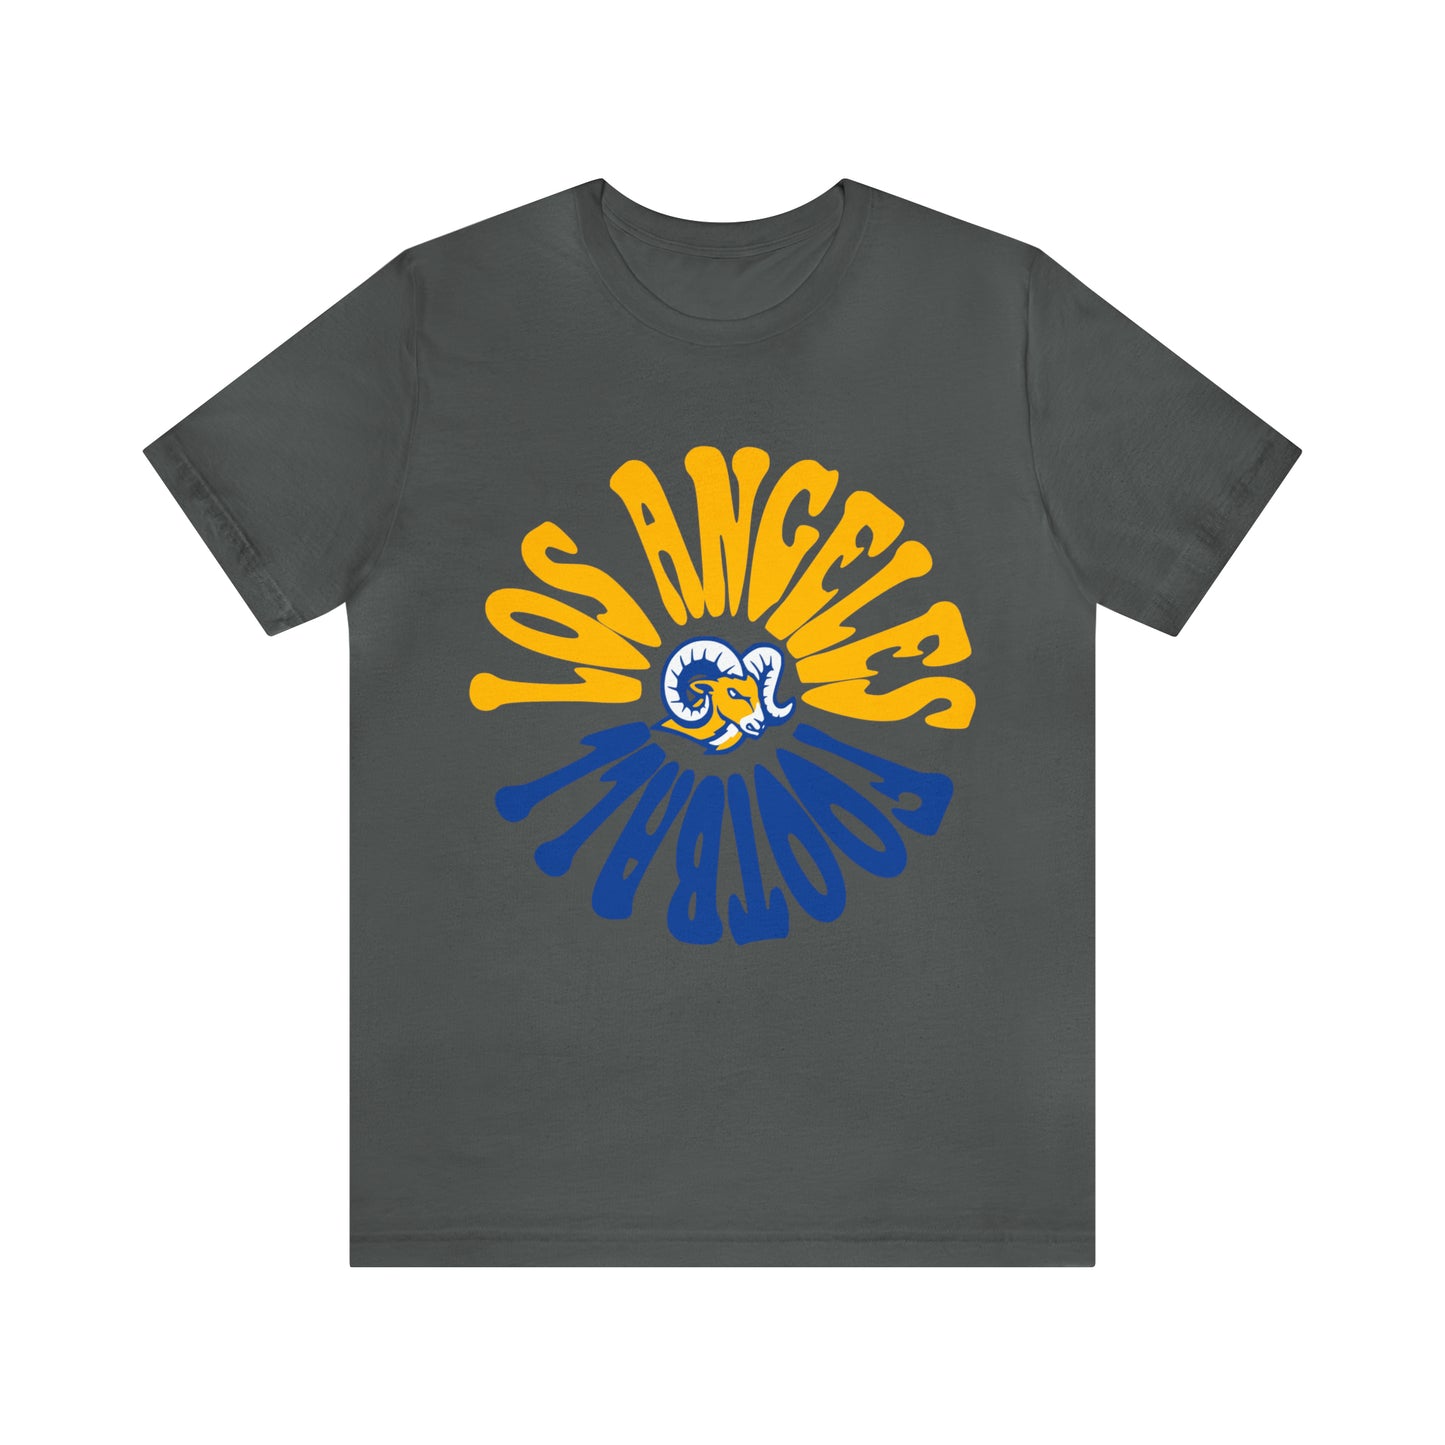 Vintage Los Angeles Rams Tee - Retro California Football T-Shirt Apparel - Men's & Women's Unisex Sizing - Design 2